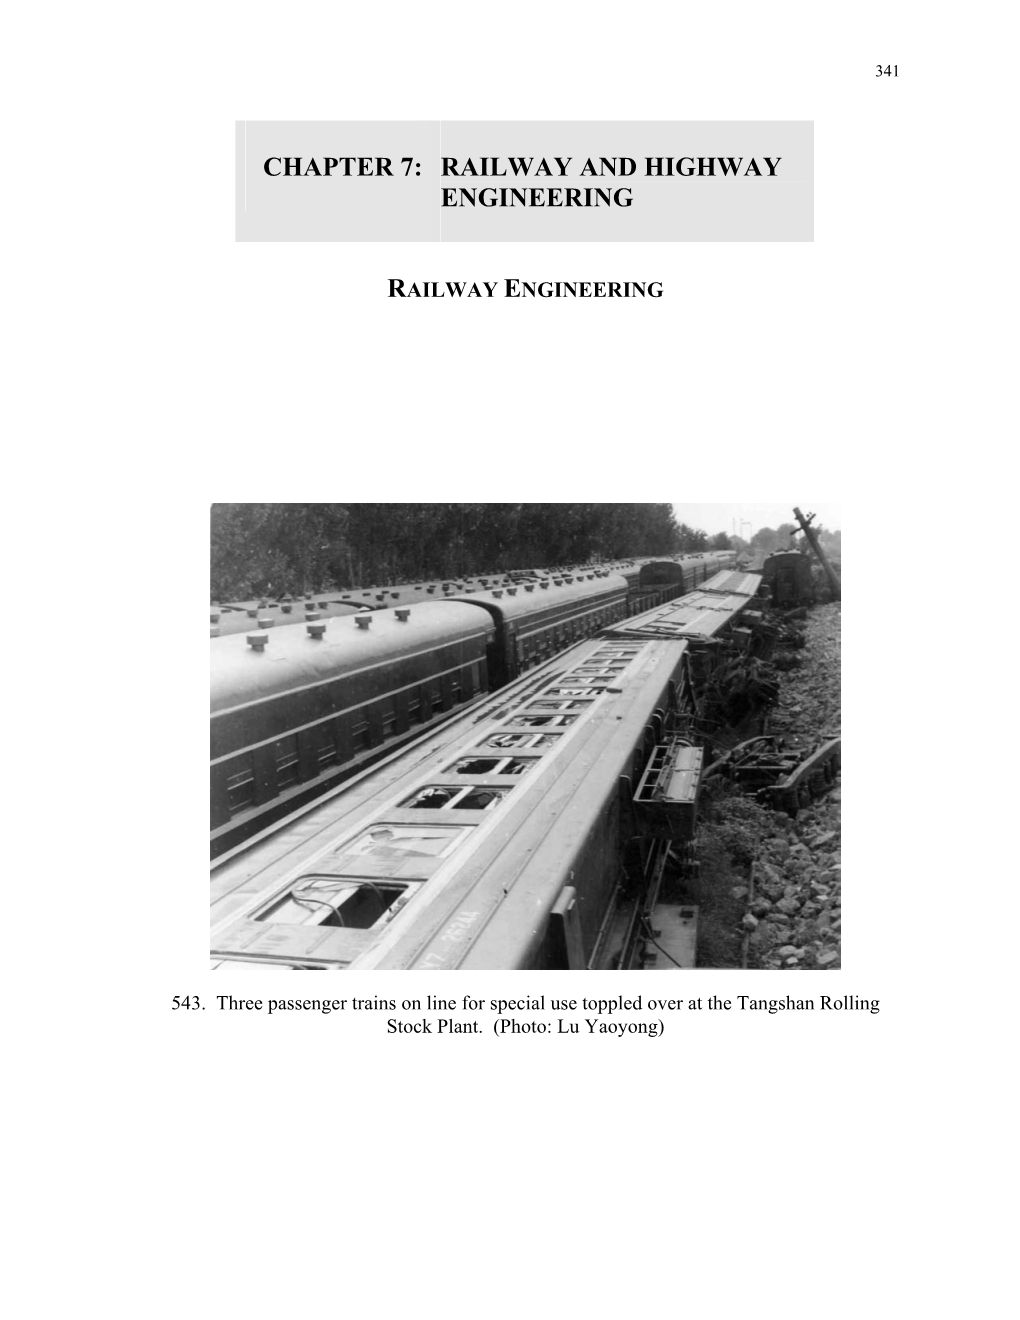 Chapter 7: Railway and Highway Engineering